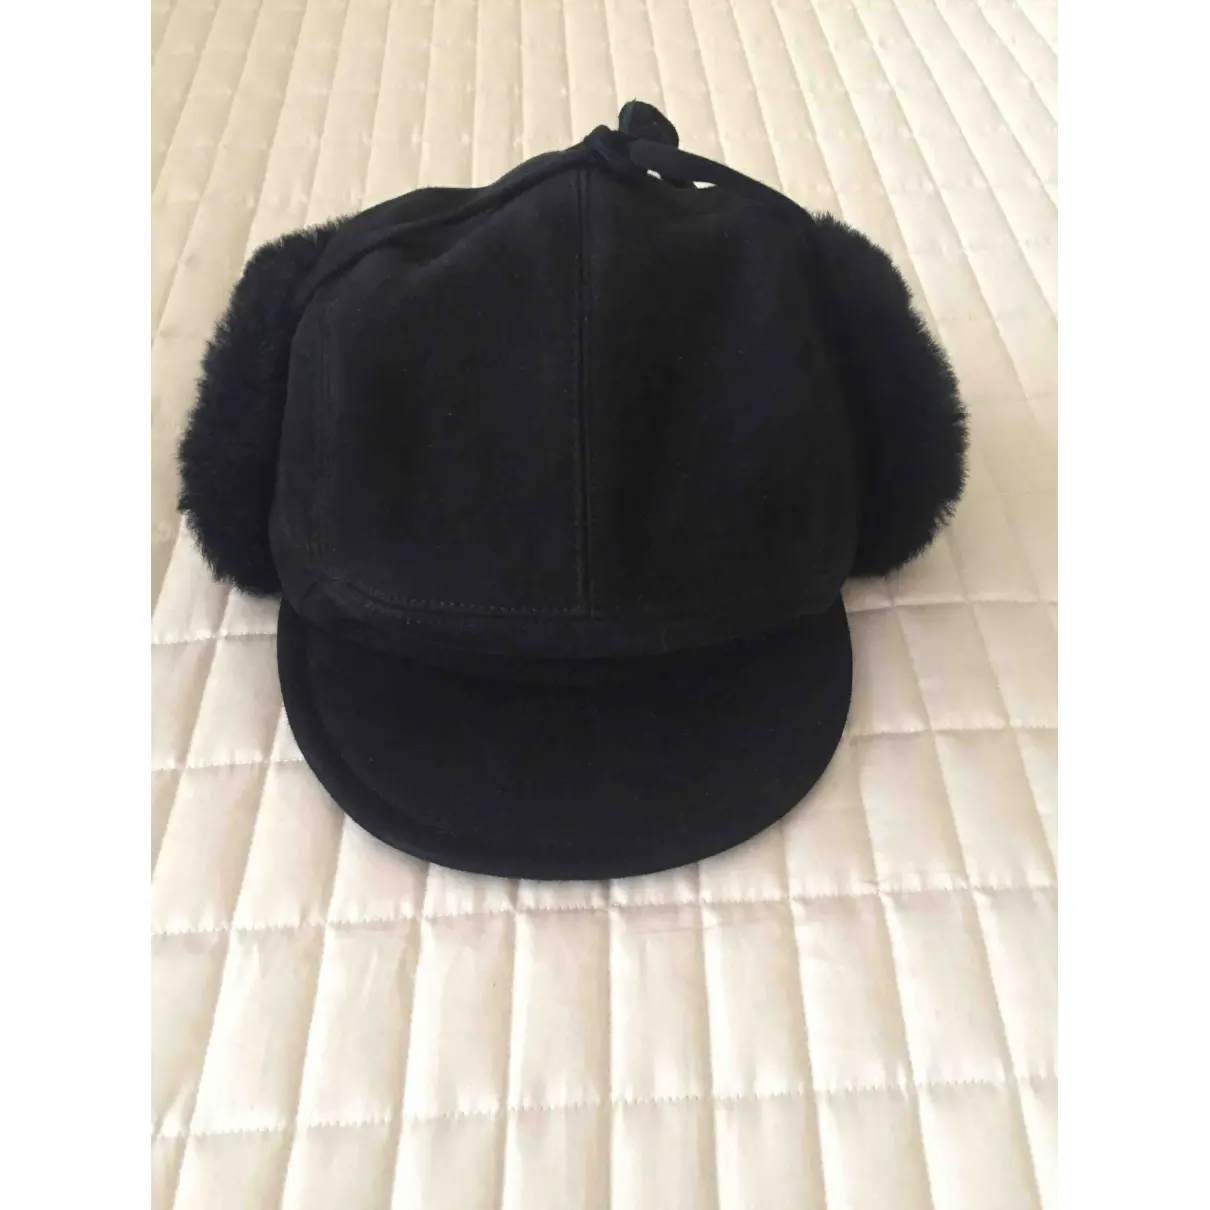 Buy Borsalino Leather hat online